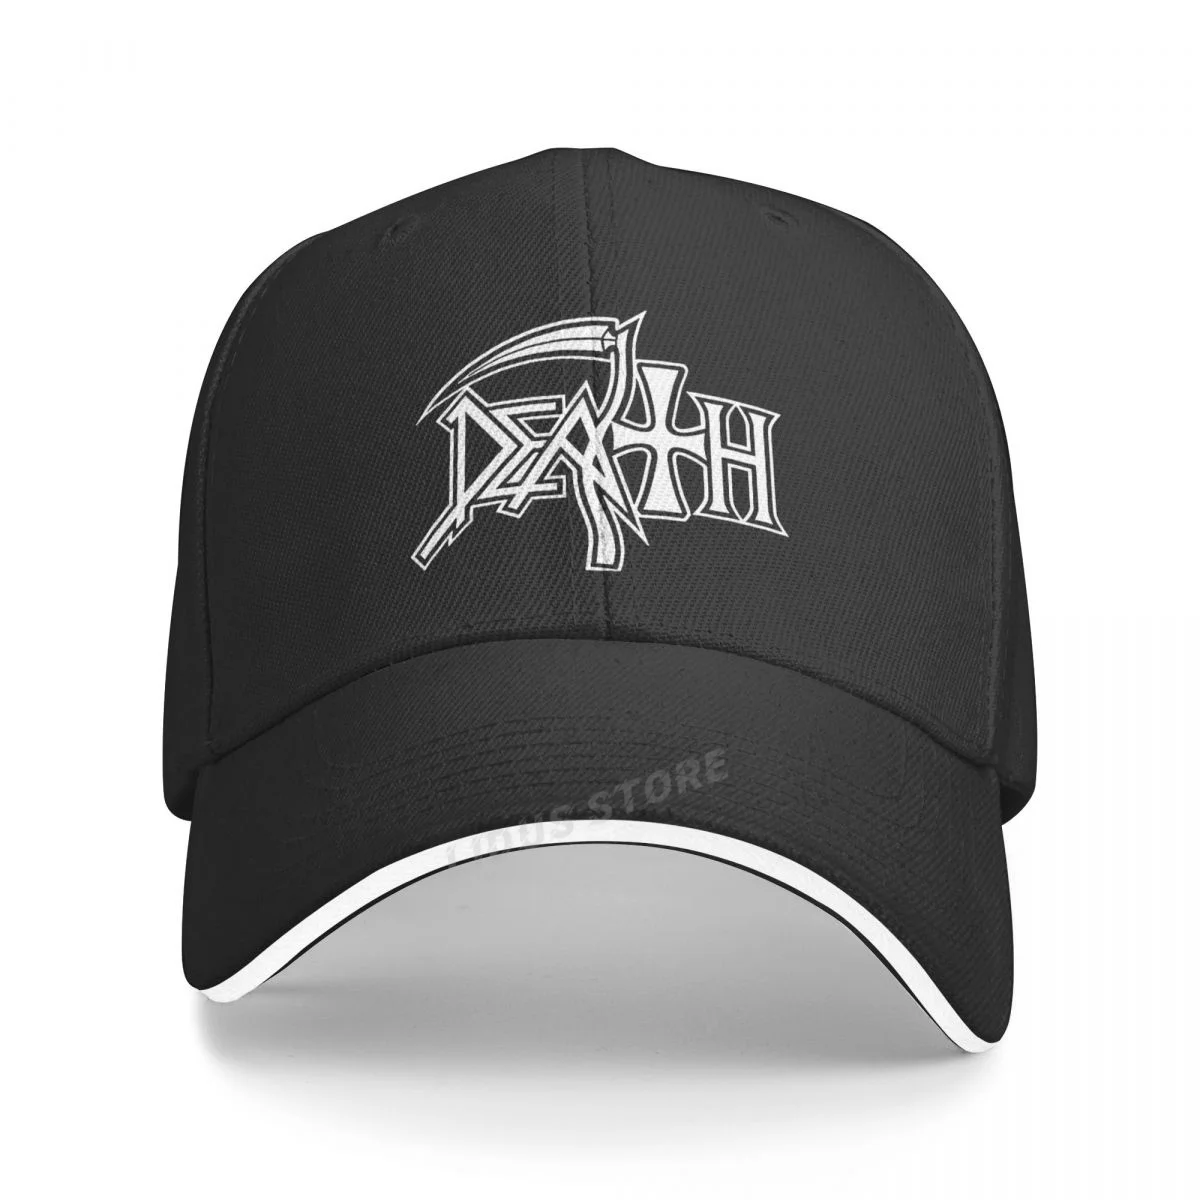 ROCK BAND HEAVY METAL Death Caps Men Women Cool Cotton Adjustable Baseball Cap Hip Hop Music Hats